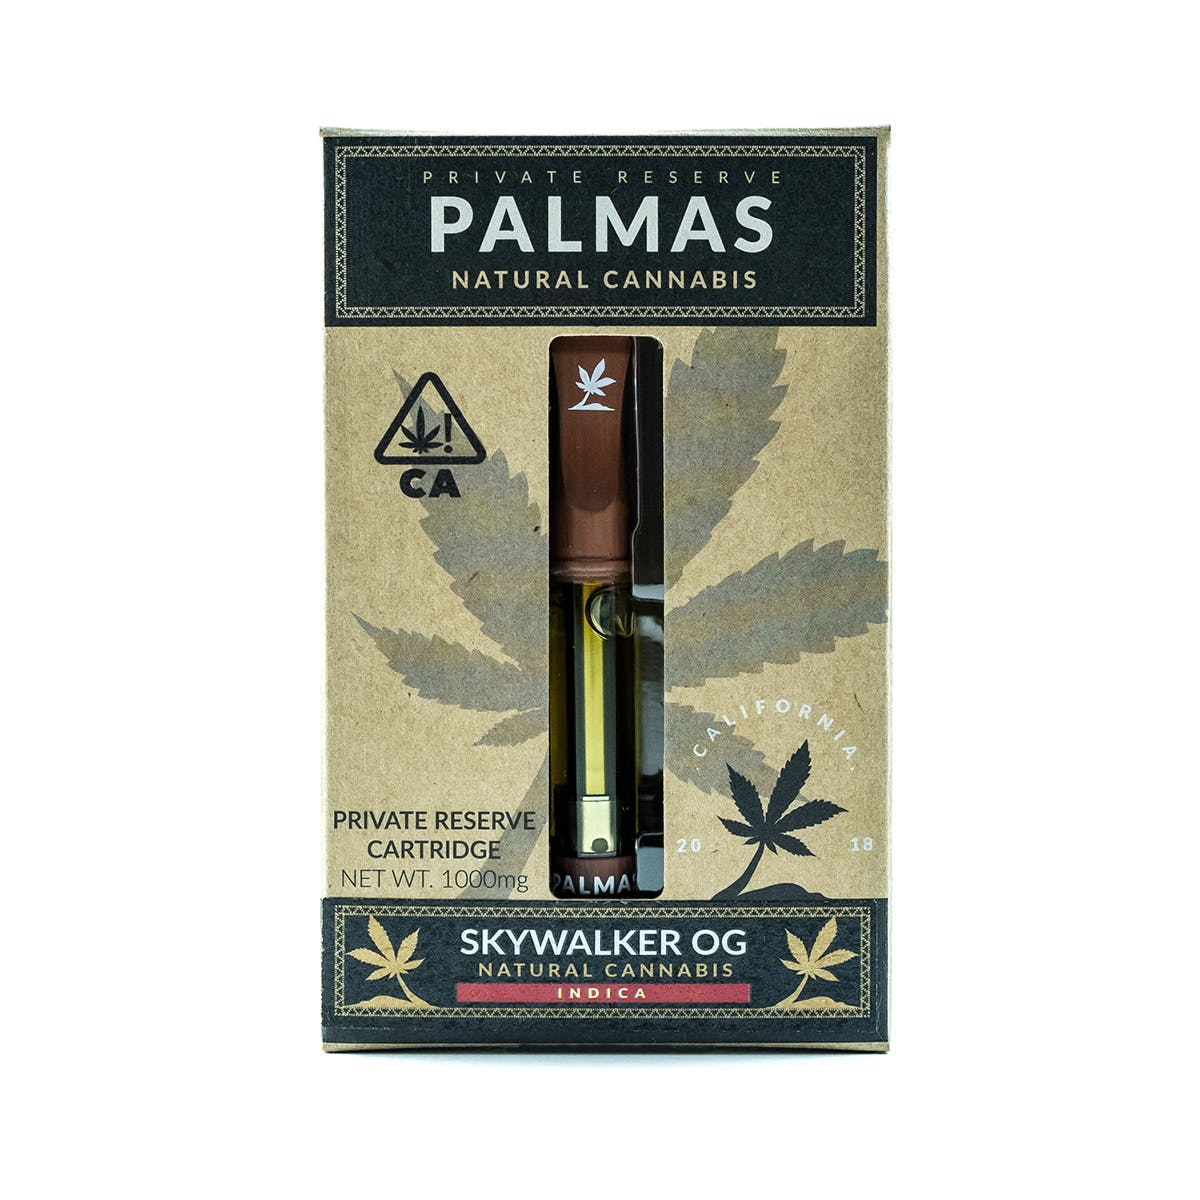 marijuana-dispensaries-white-castle-in-wilmington-palmas-private-reserve-cartridge-skywalker-og